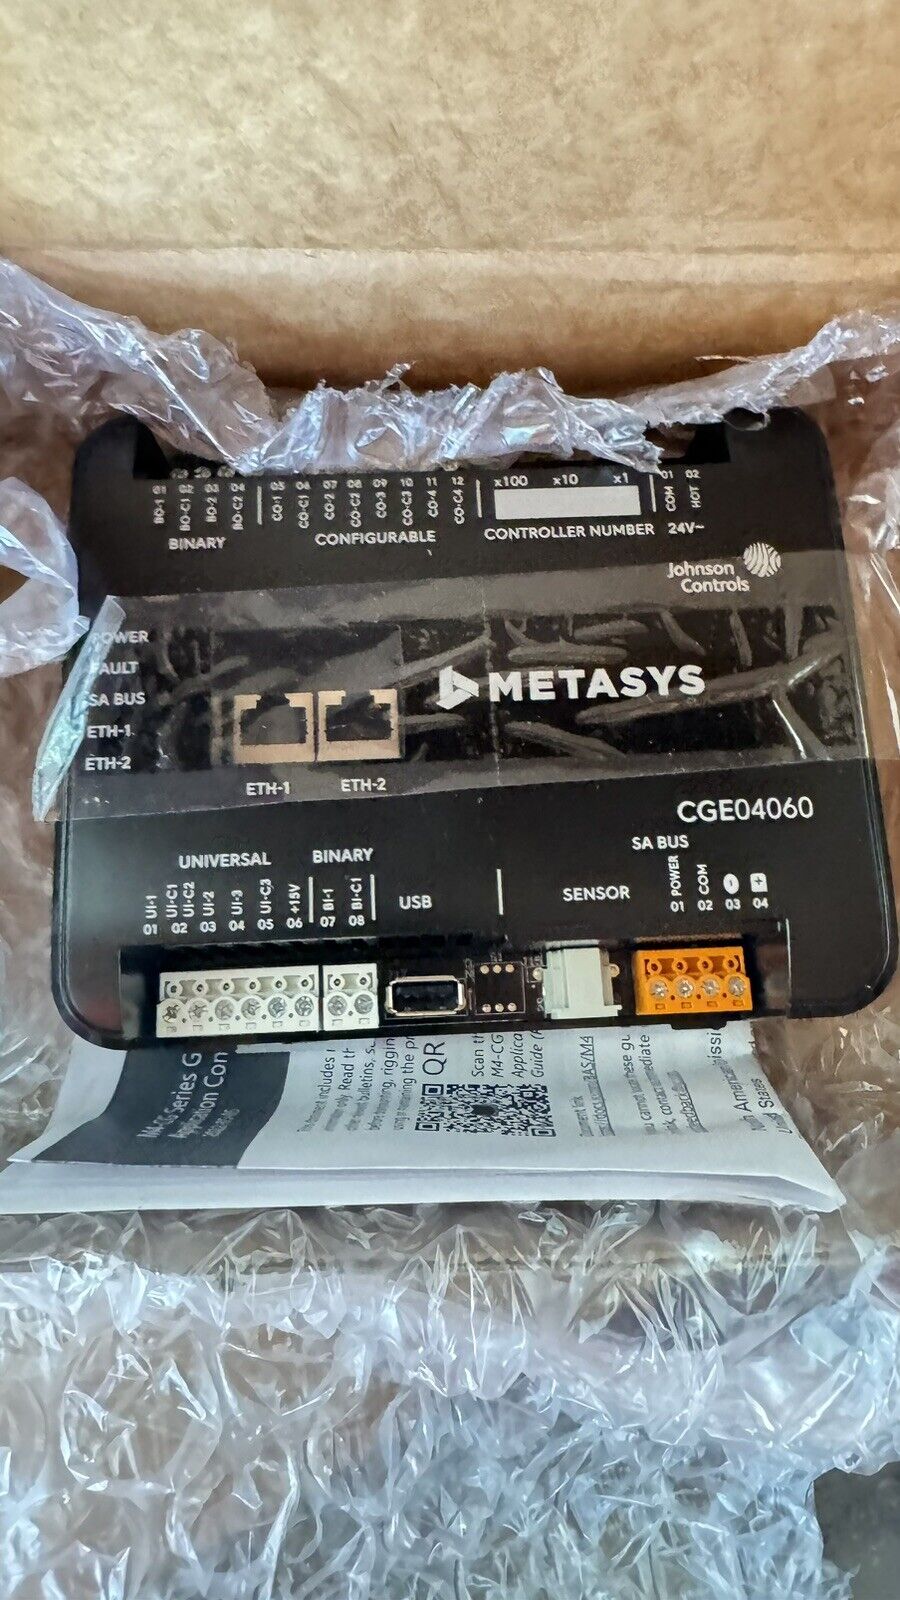 Metasys CGE04060 JCI Johnson controls Controller